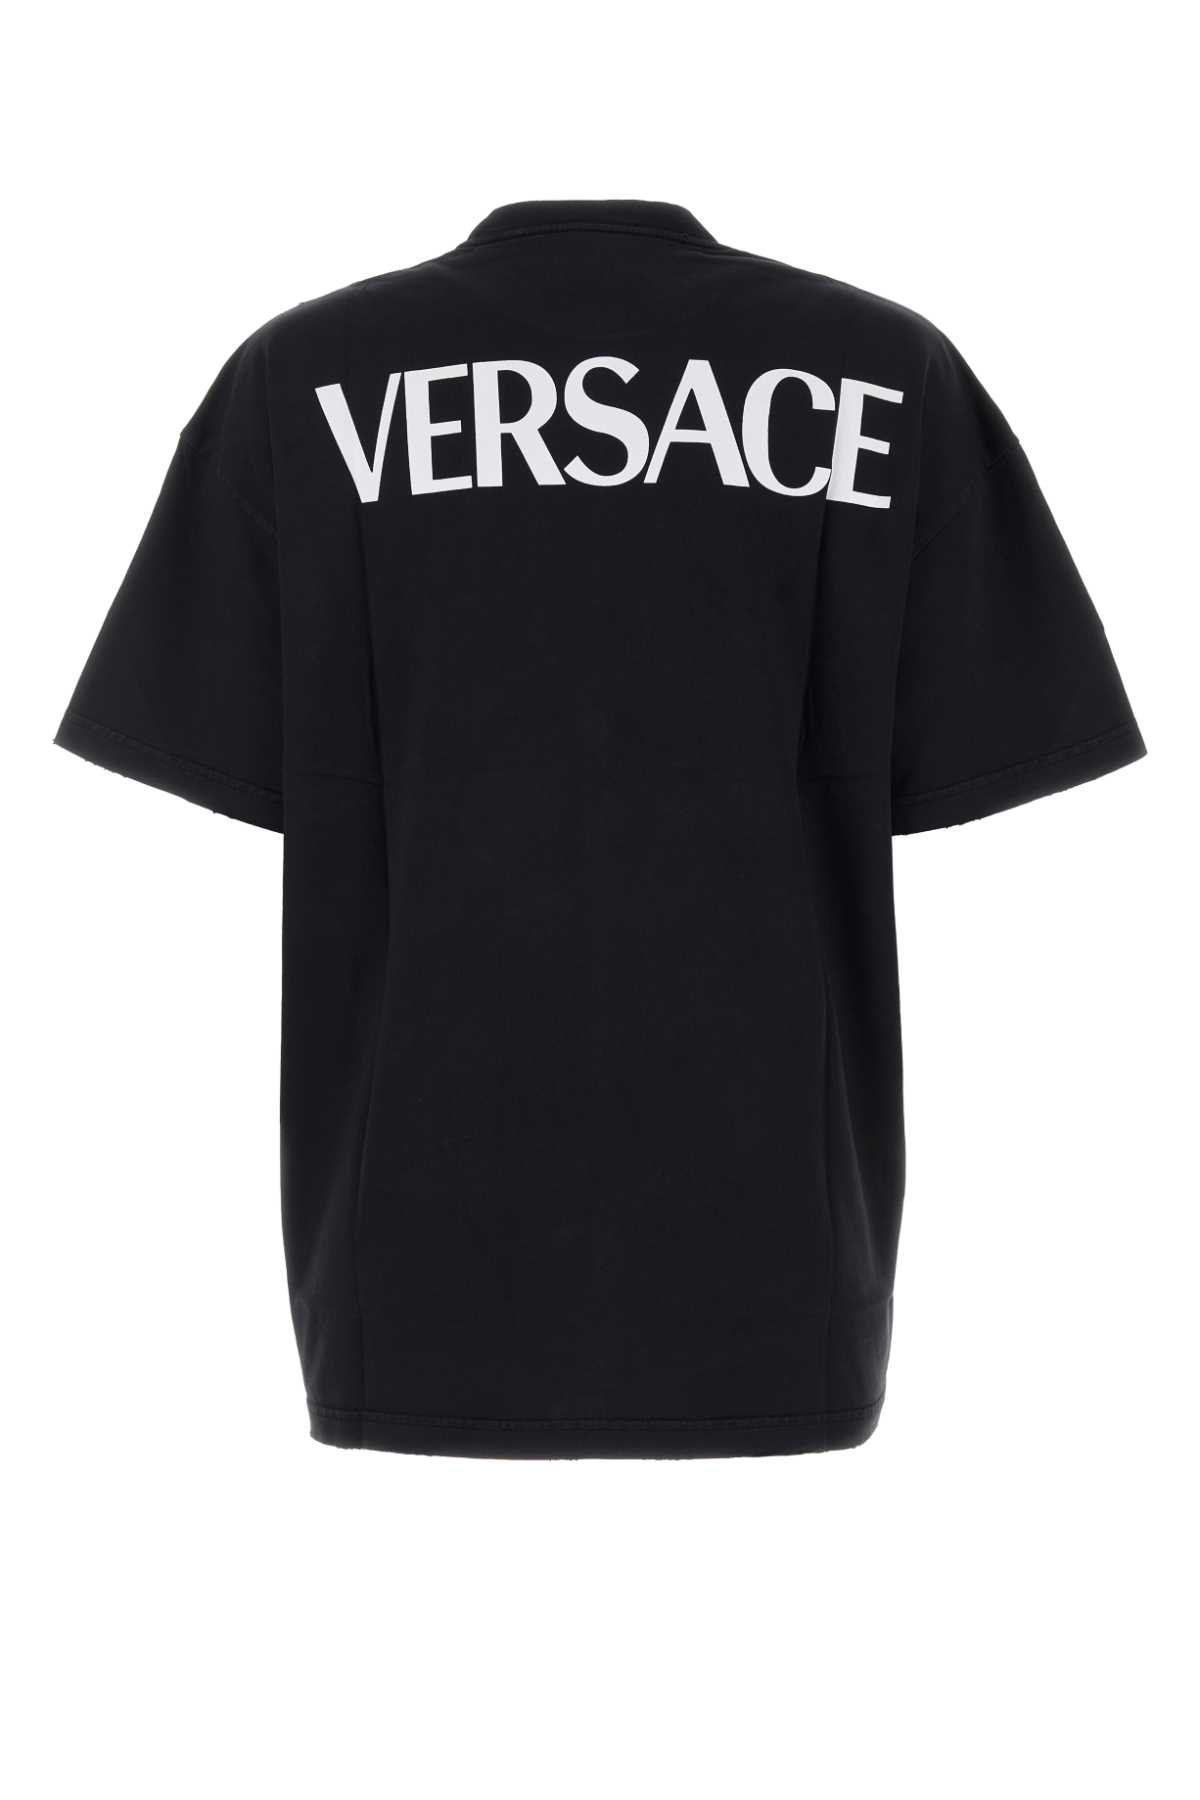 Versace Black Cotton Oversize T-shirt